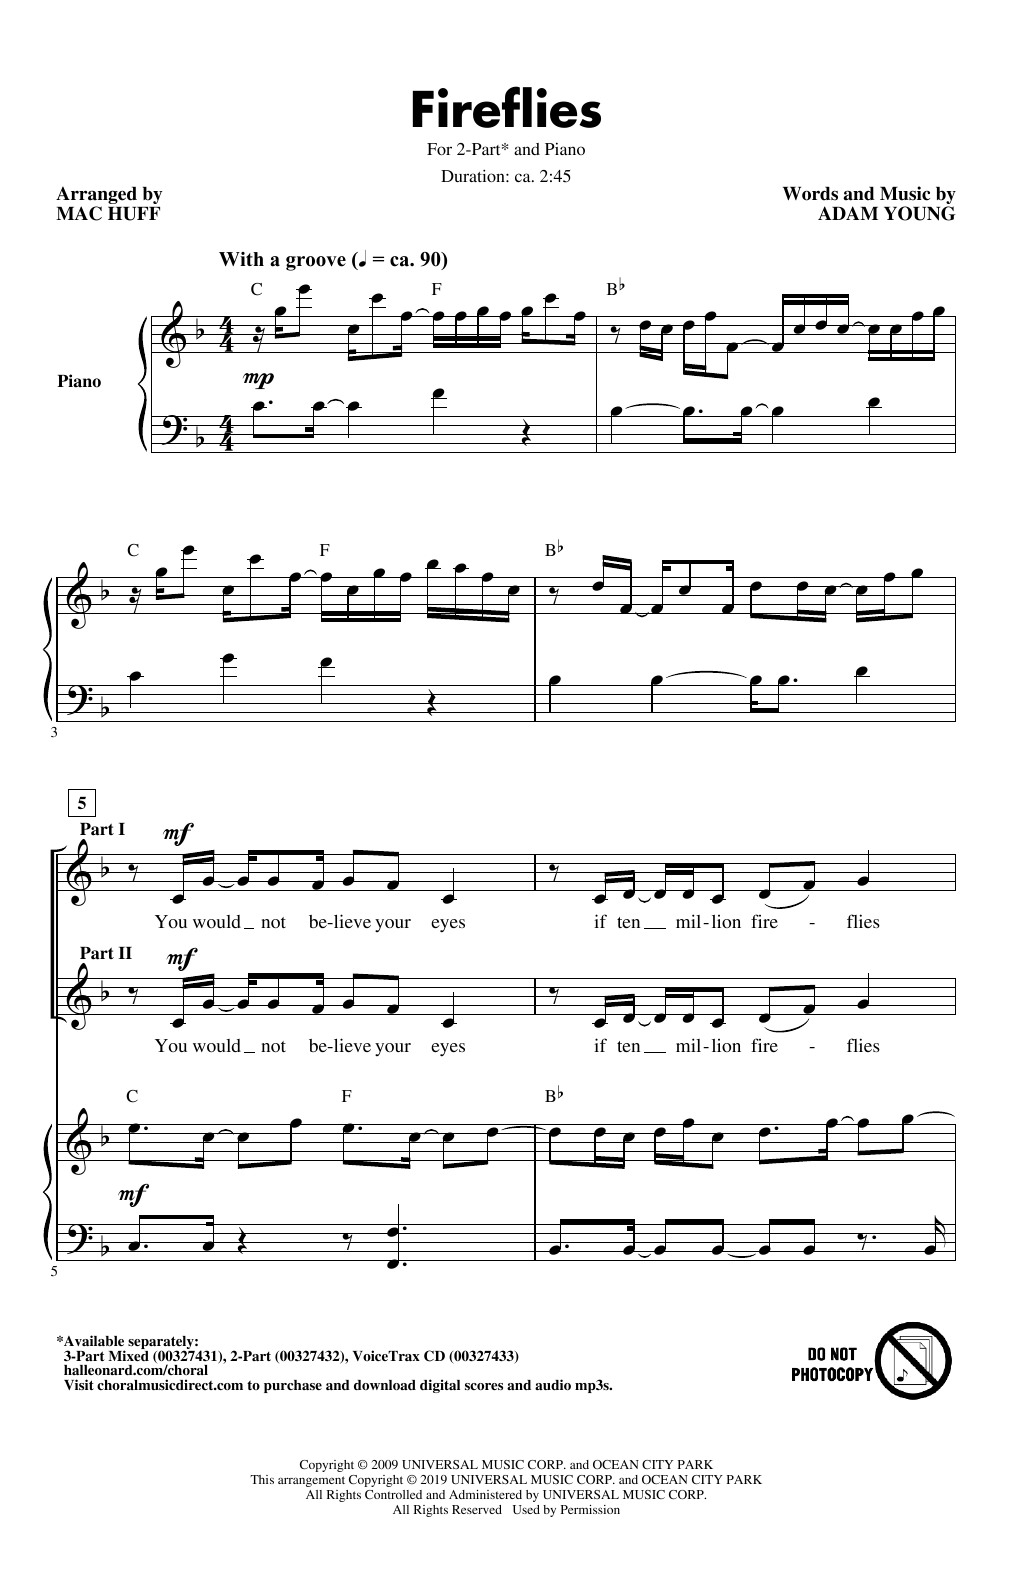 Owl City Fireflies (arr. Mac Huff) Sheet Music Notes & Chords for 2-Part Choir - Download or Print PDF